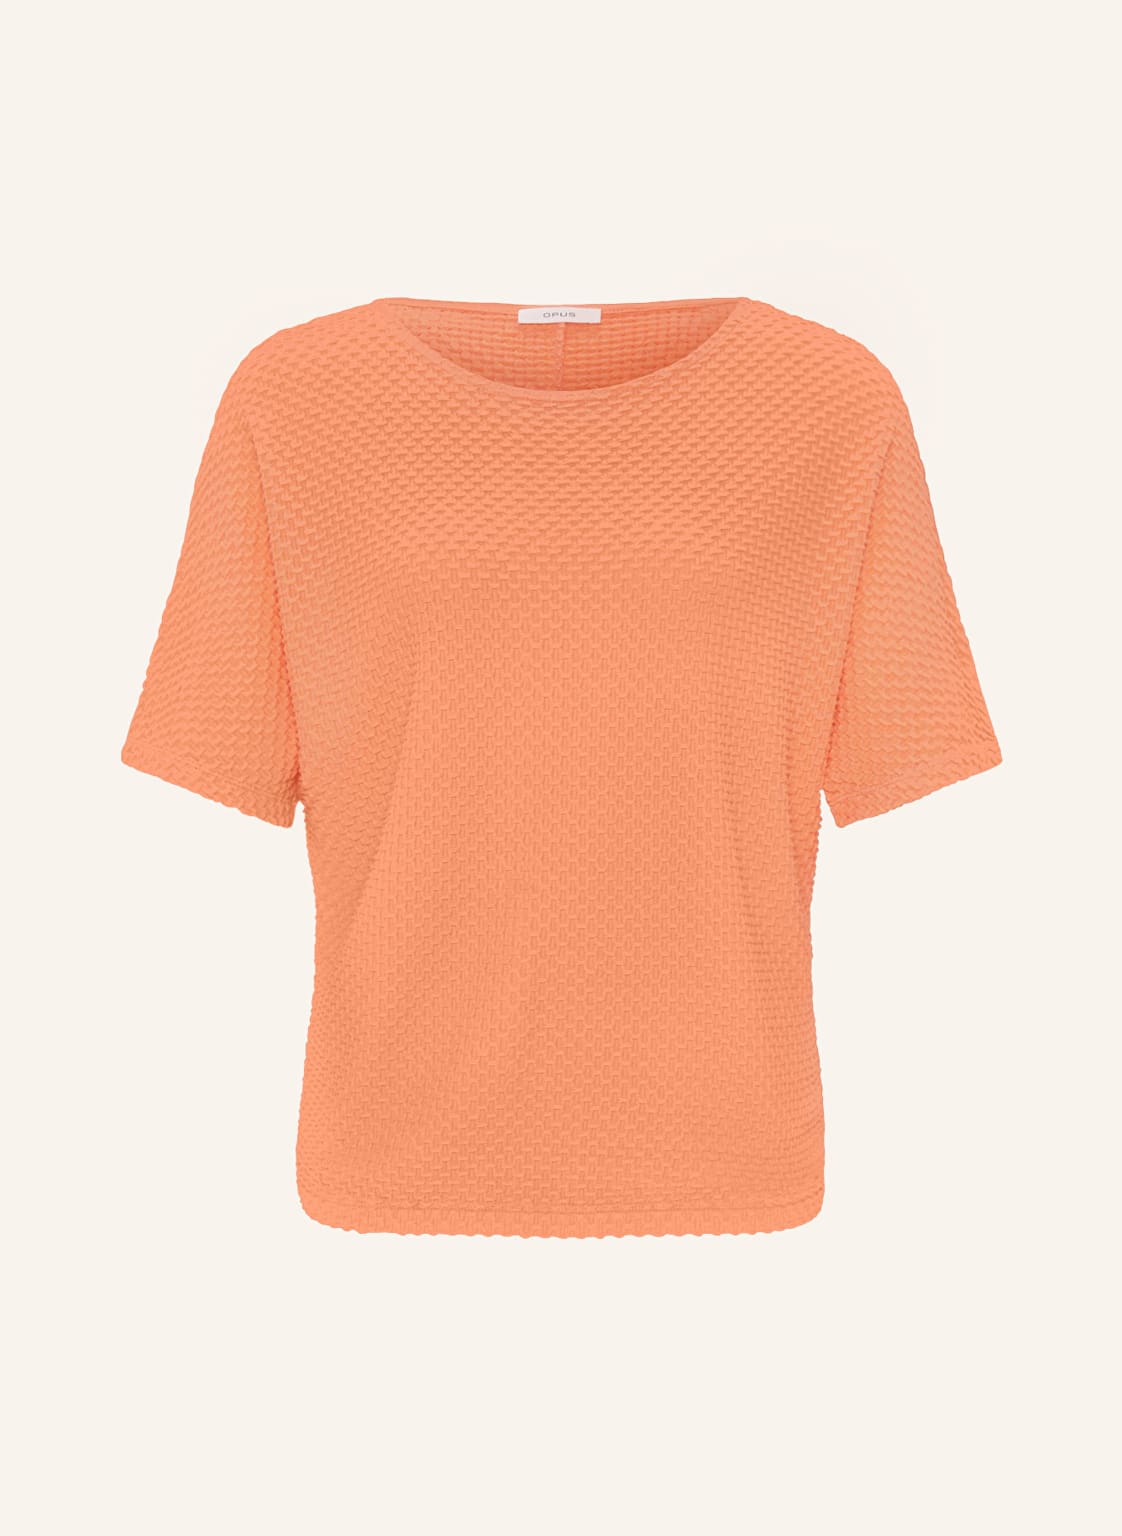 Opus Shirt Sedoni orange von Opus